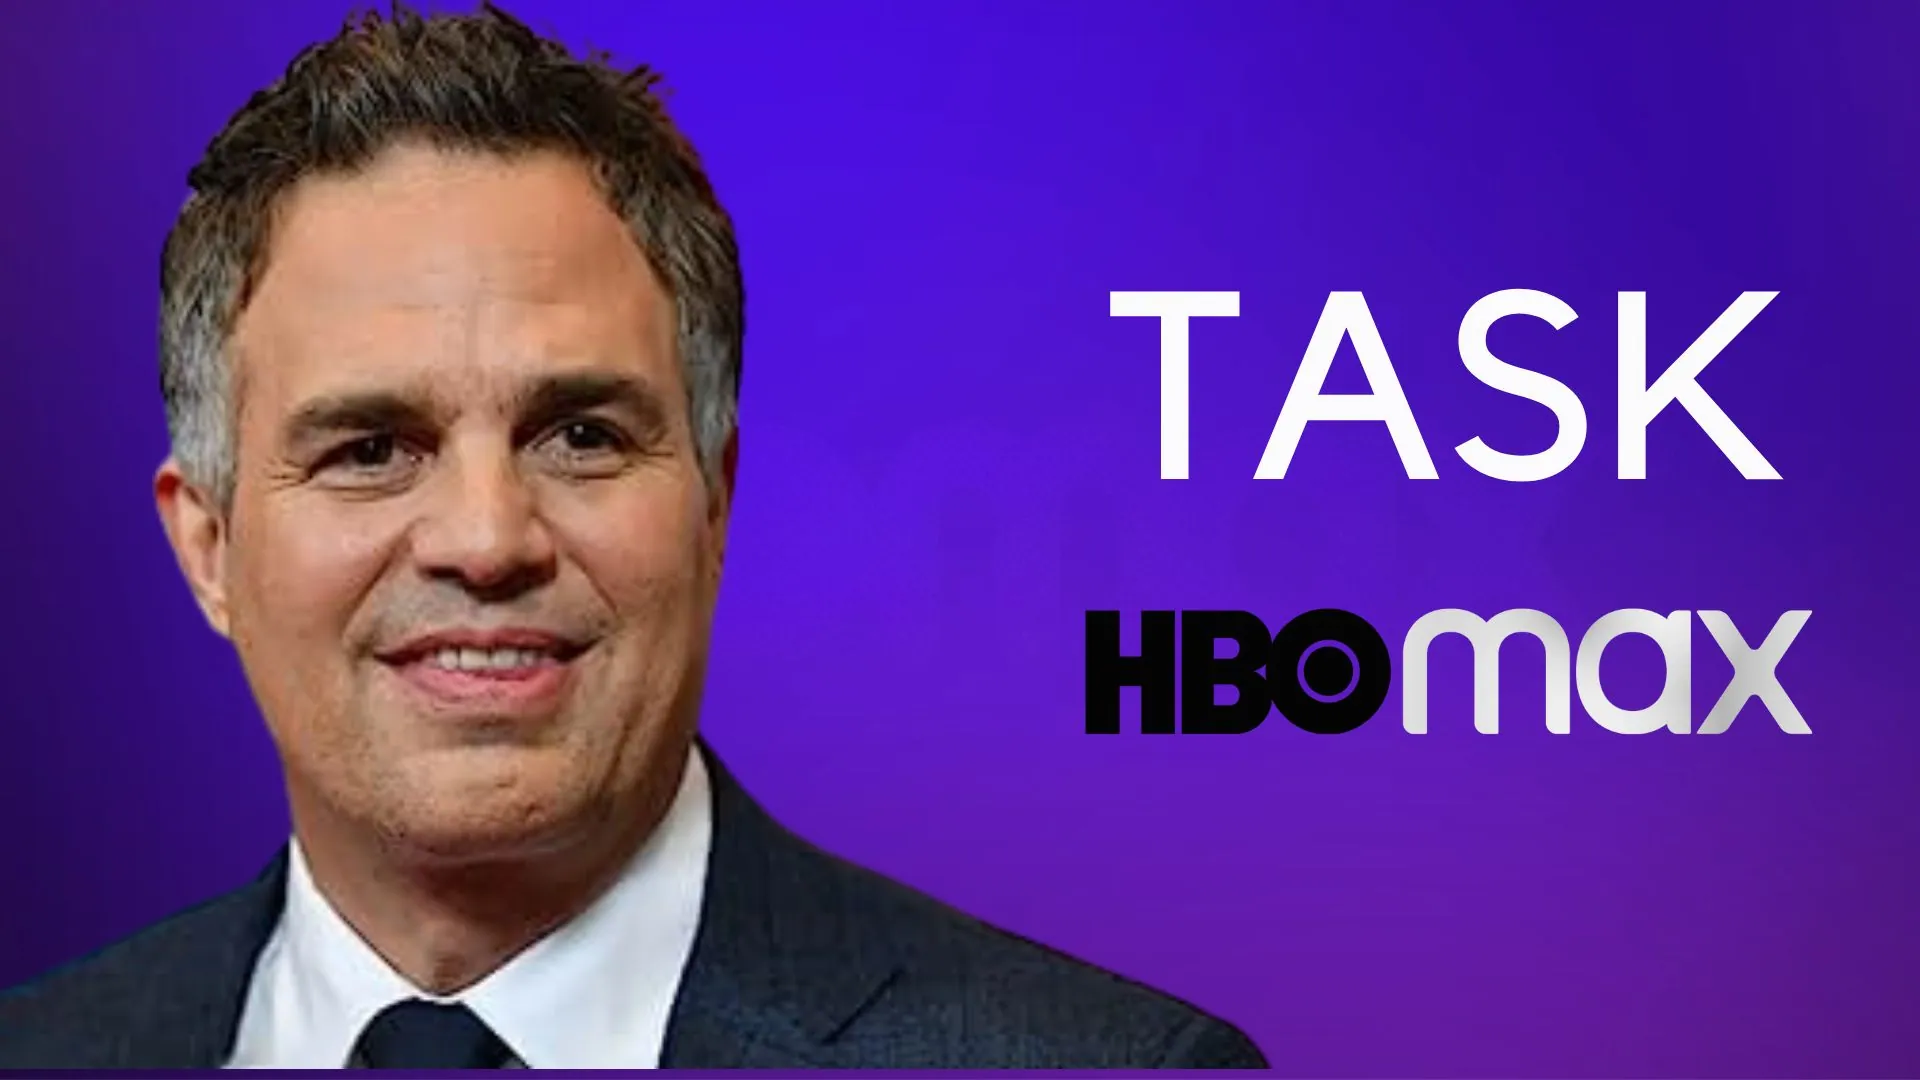 HBO Series "Task" Filming in Aston Township Next Week